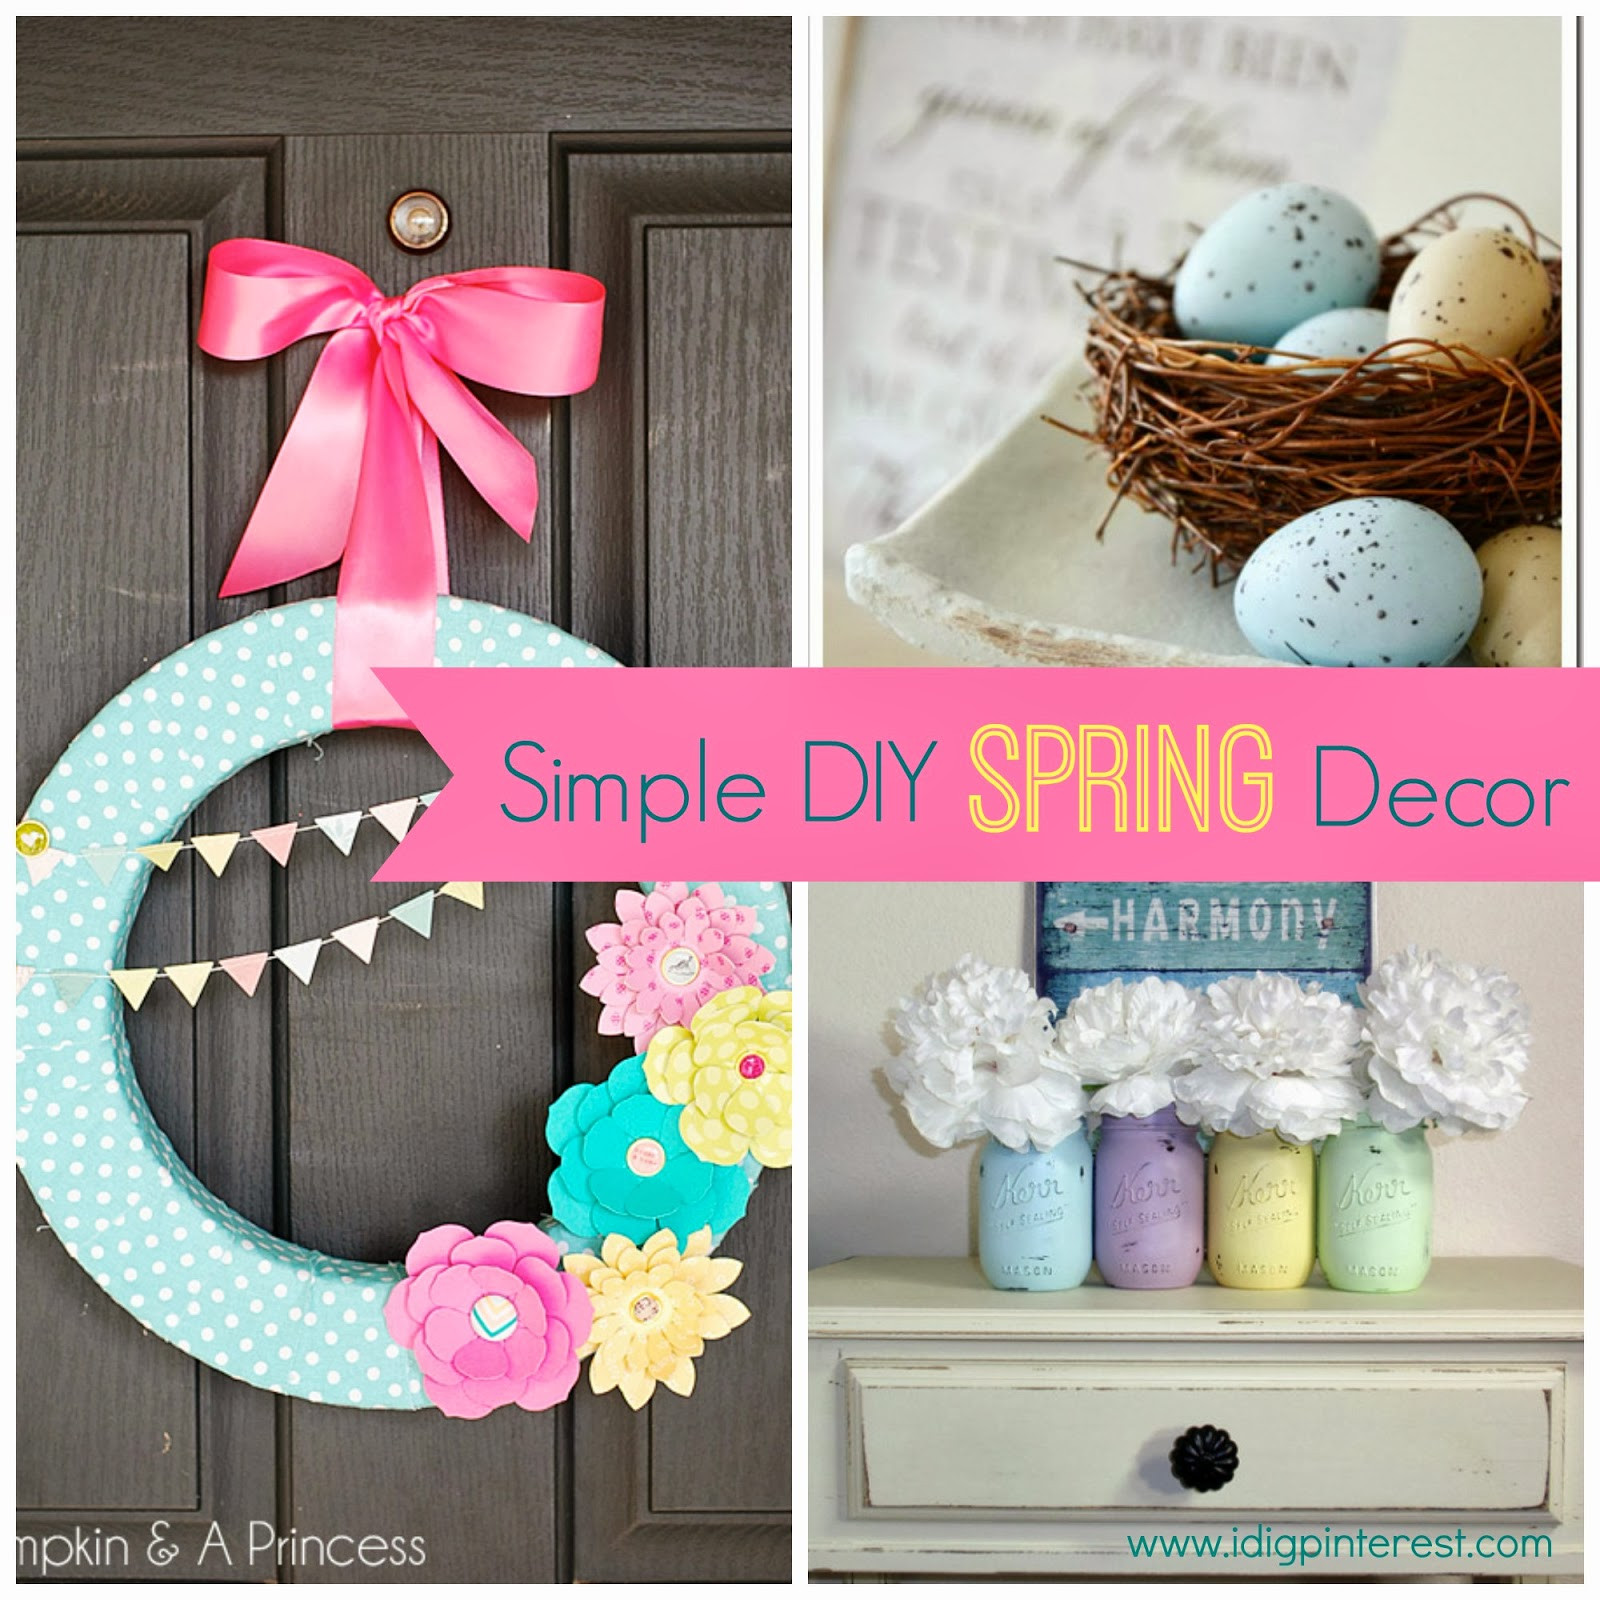 Pinterest Home Decor DIY
 Simple DIY Spring Decor Ideas I Dig Pinterest